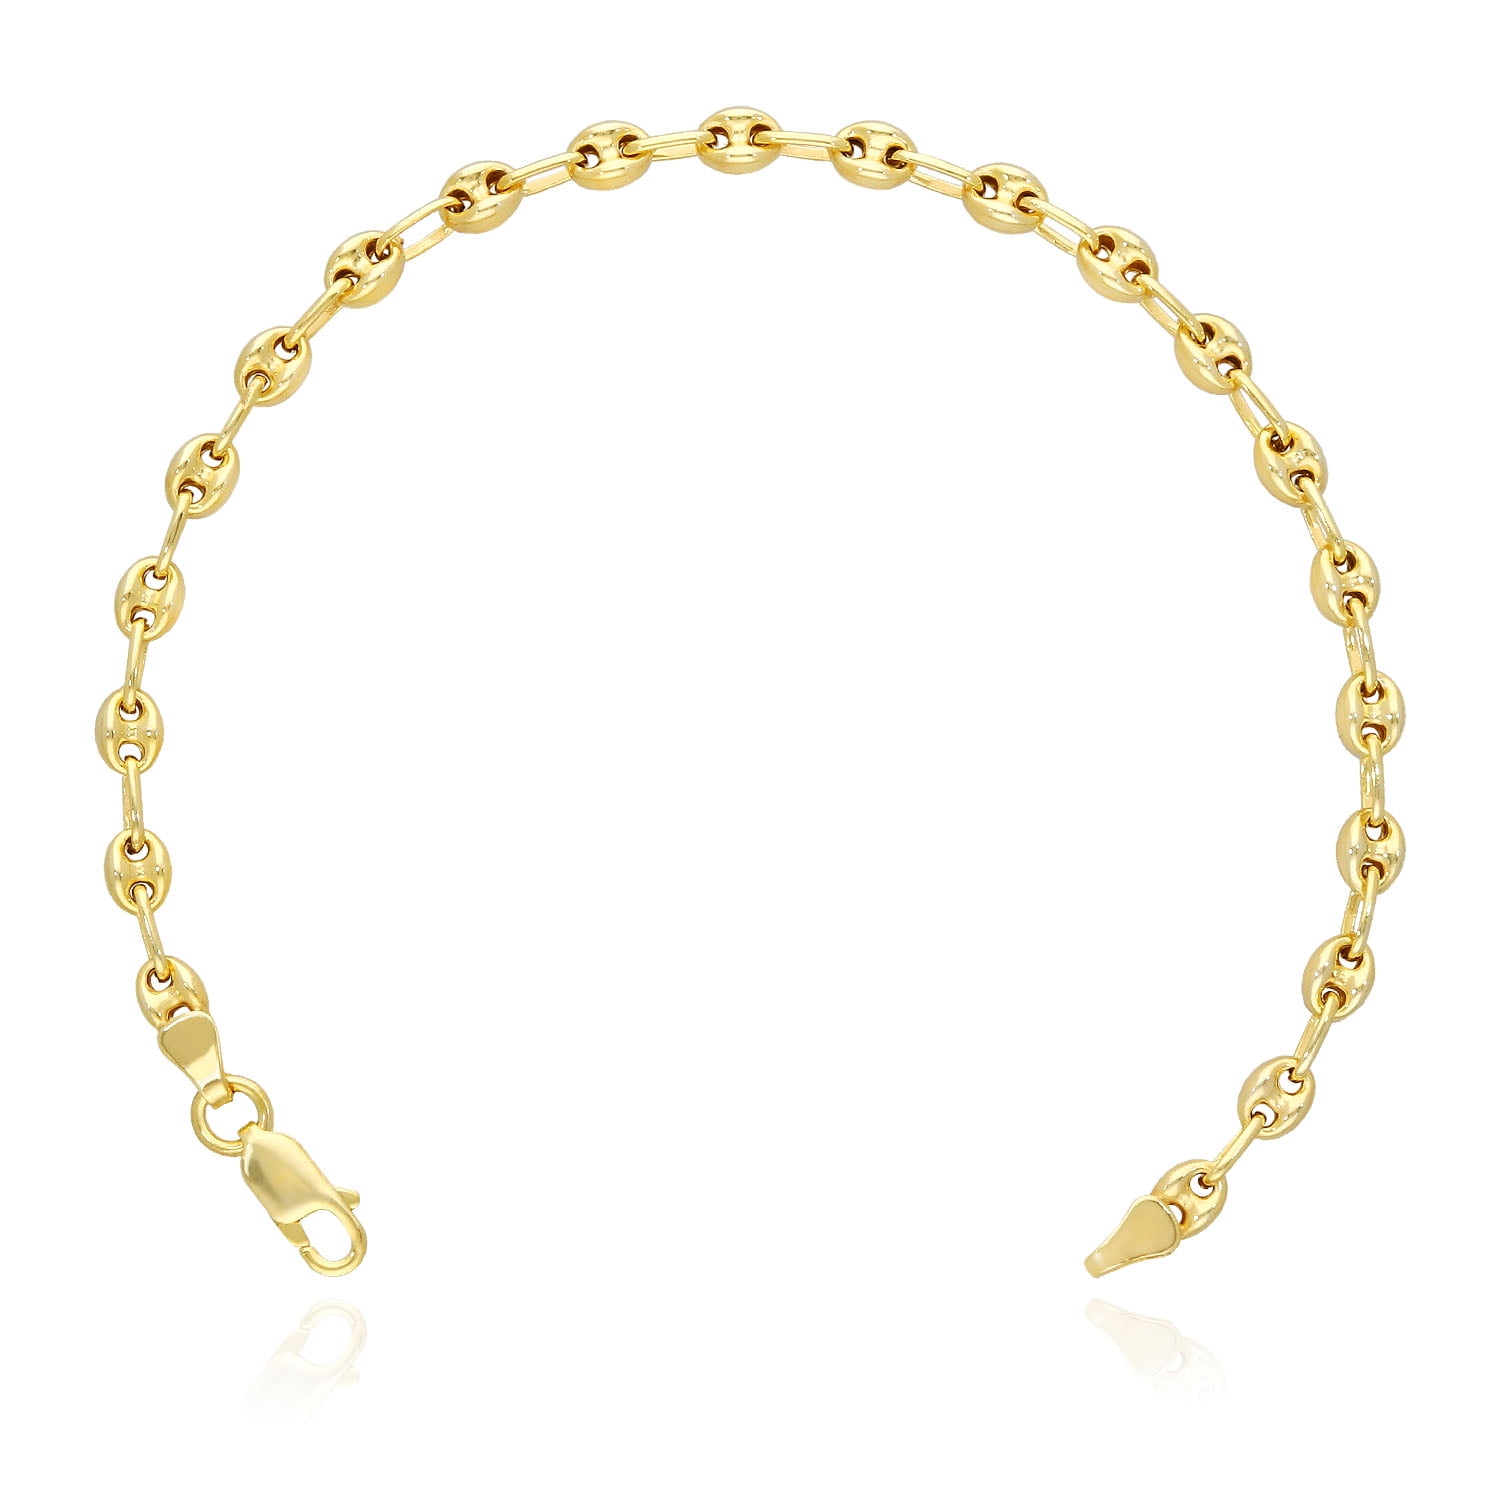 Women's Eye Charm Bracelet Chain 18K Yellow Gold Filled 8" Link Fashion Jewelry 